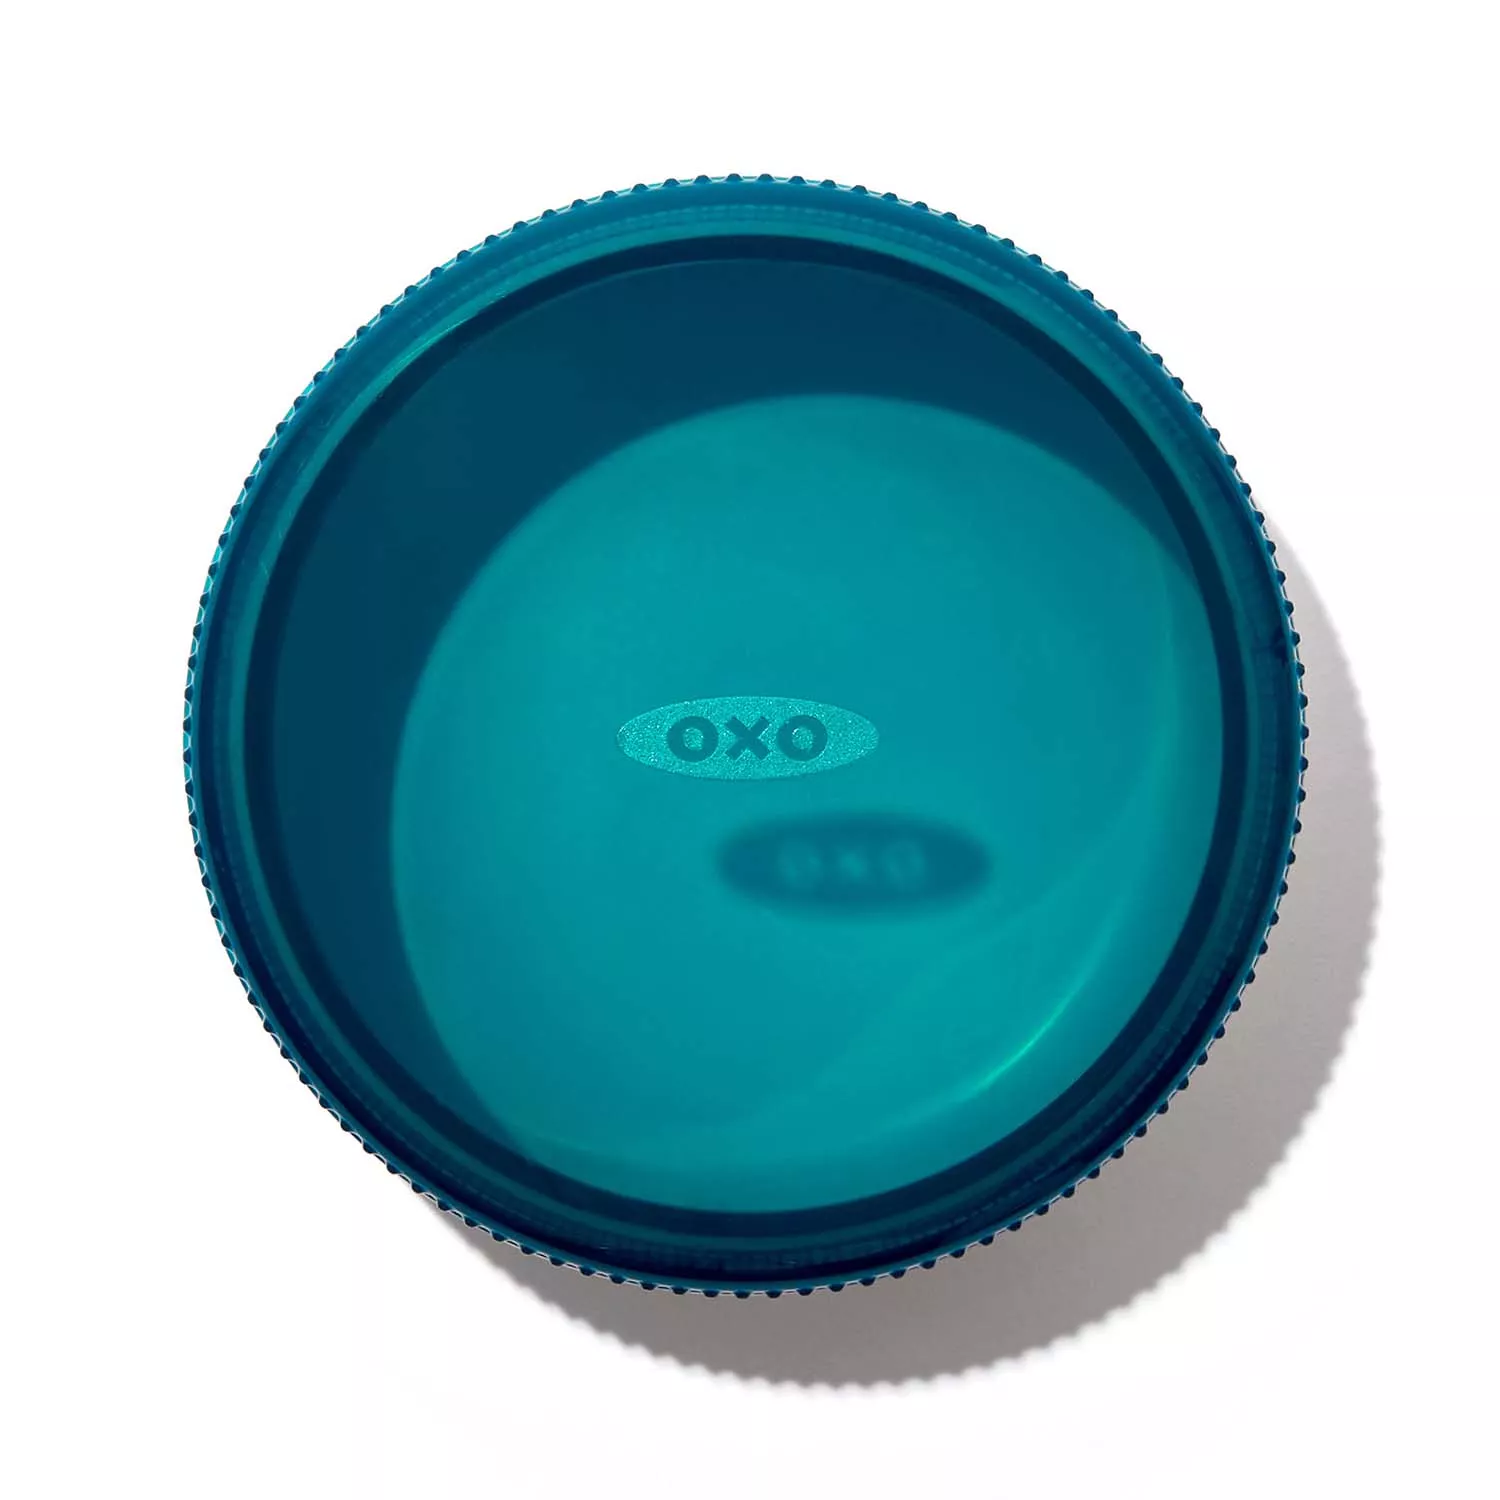 OXO Prep & Go Condiment Keeper - 2.00 oz